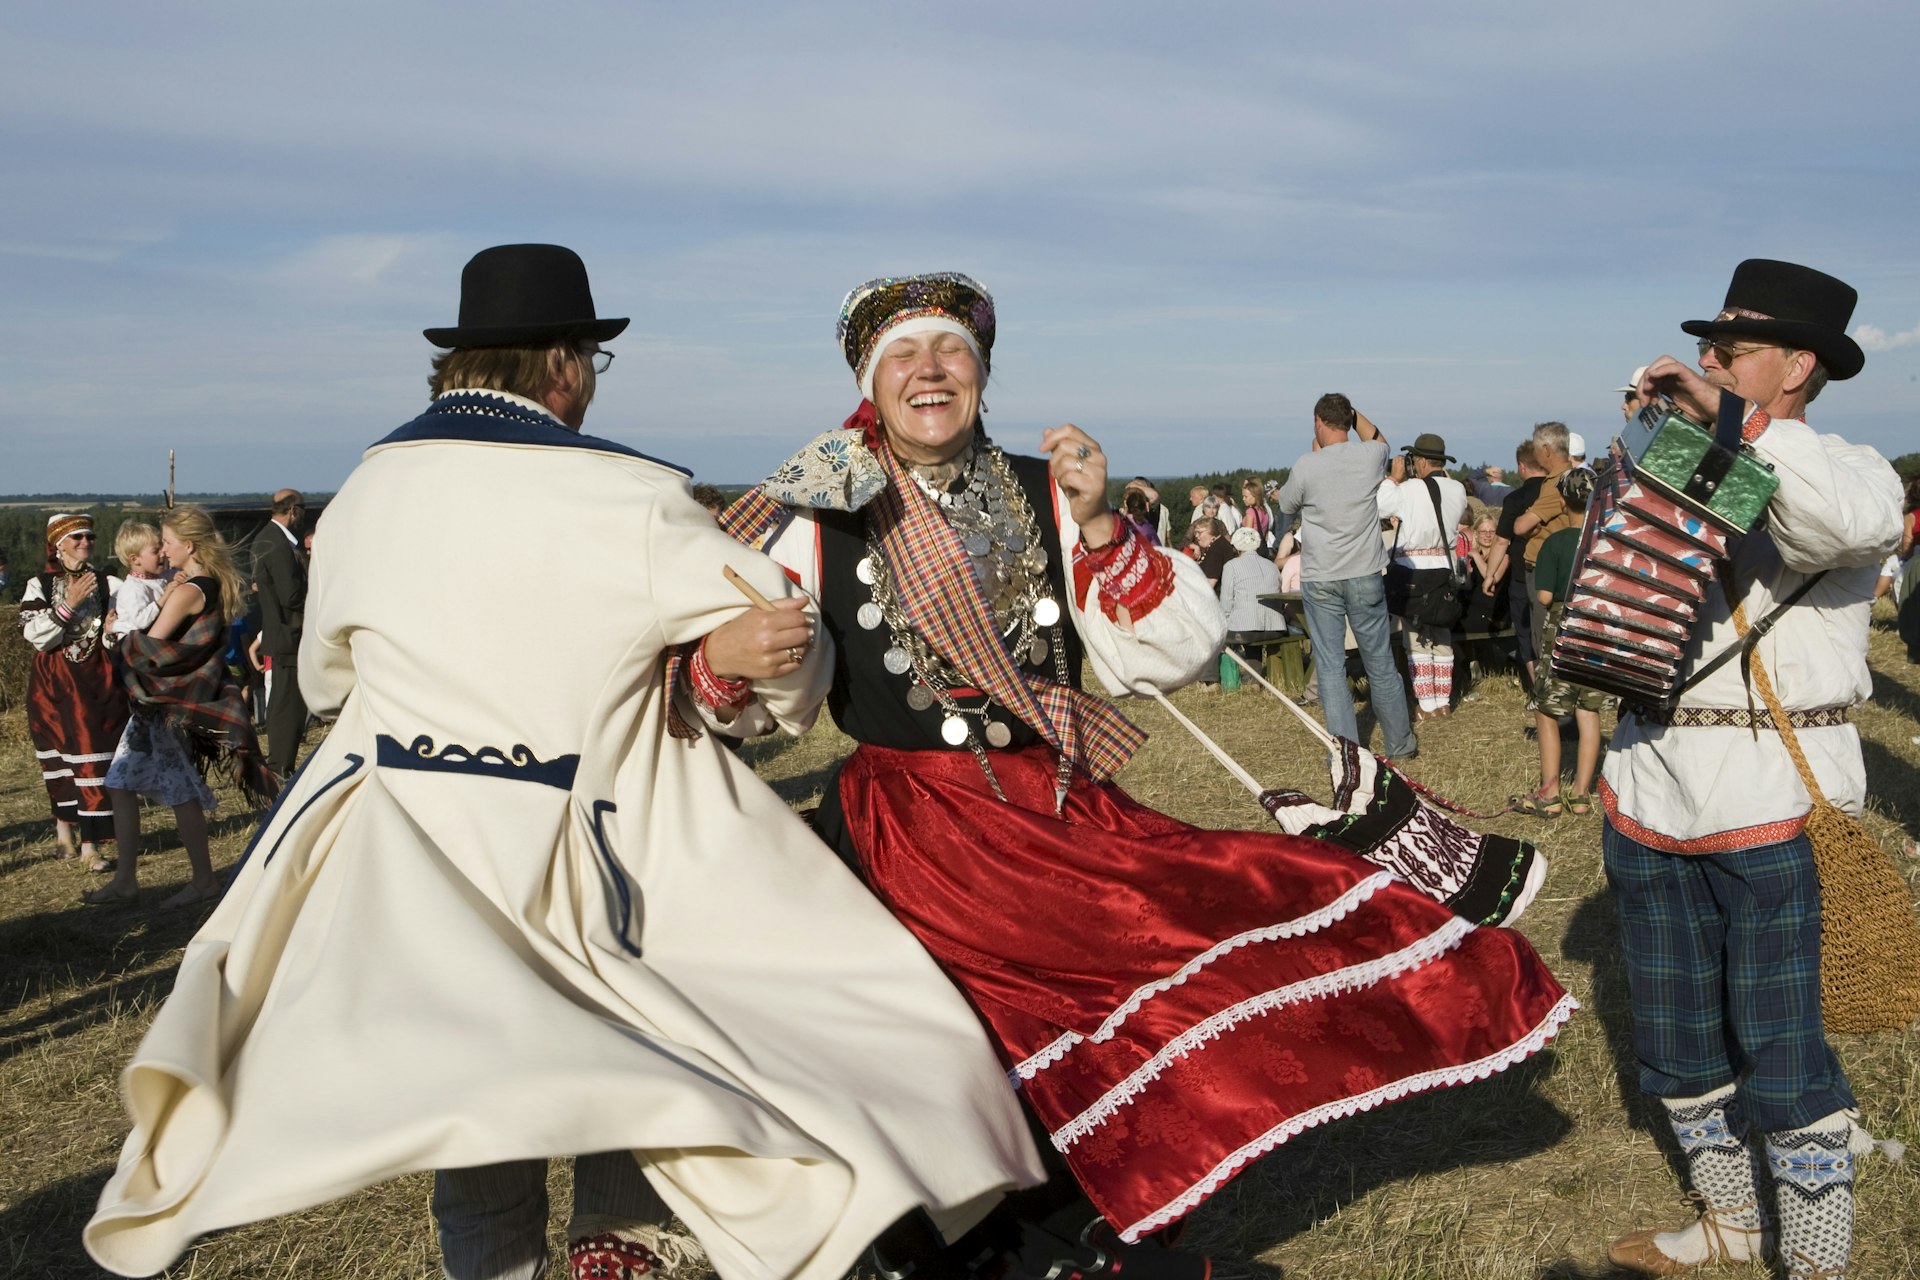 People in traditional Seto dress dance in Viru county, Estonia